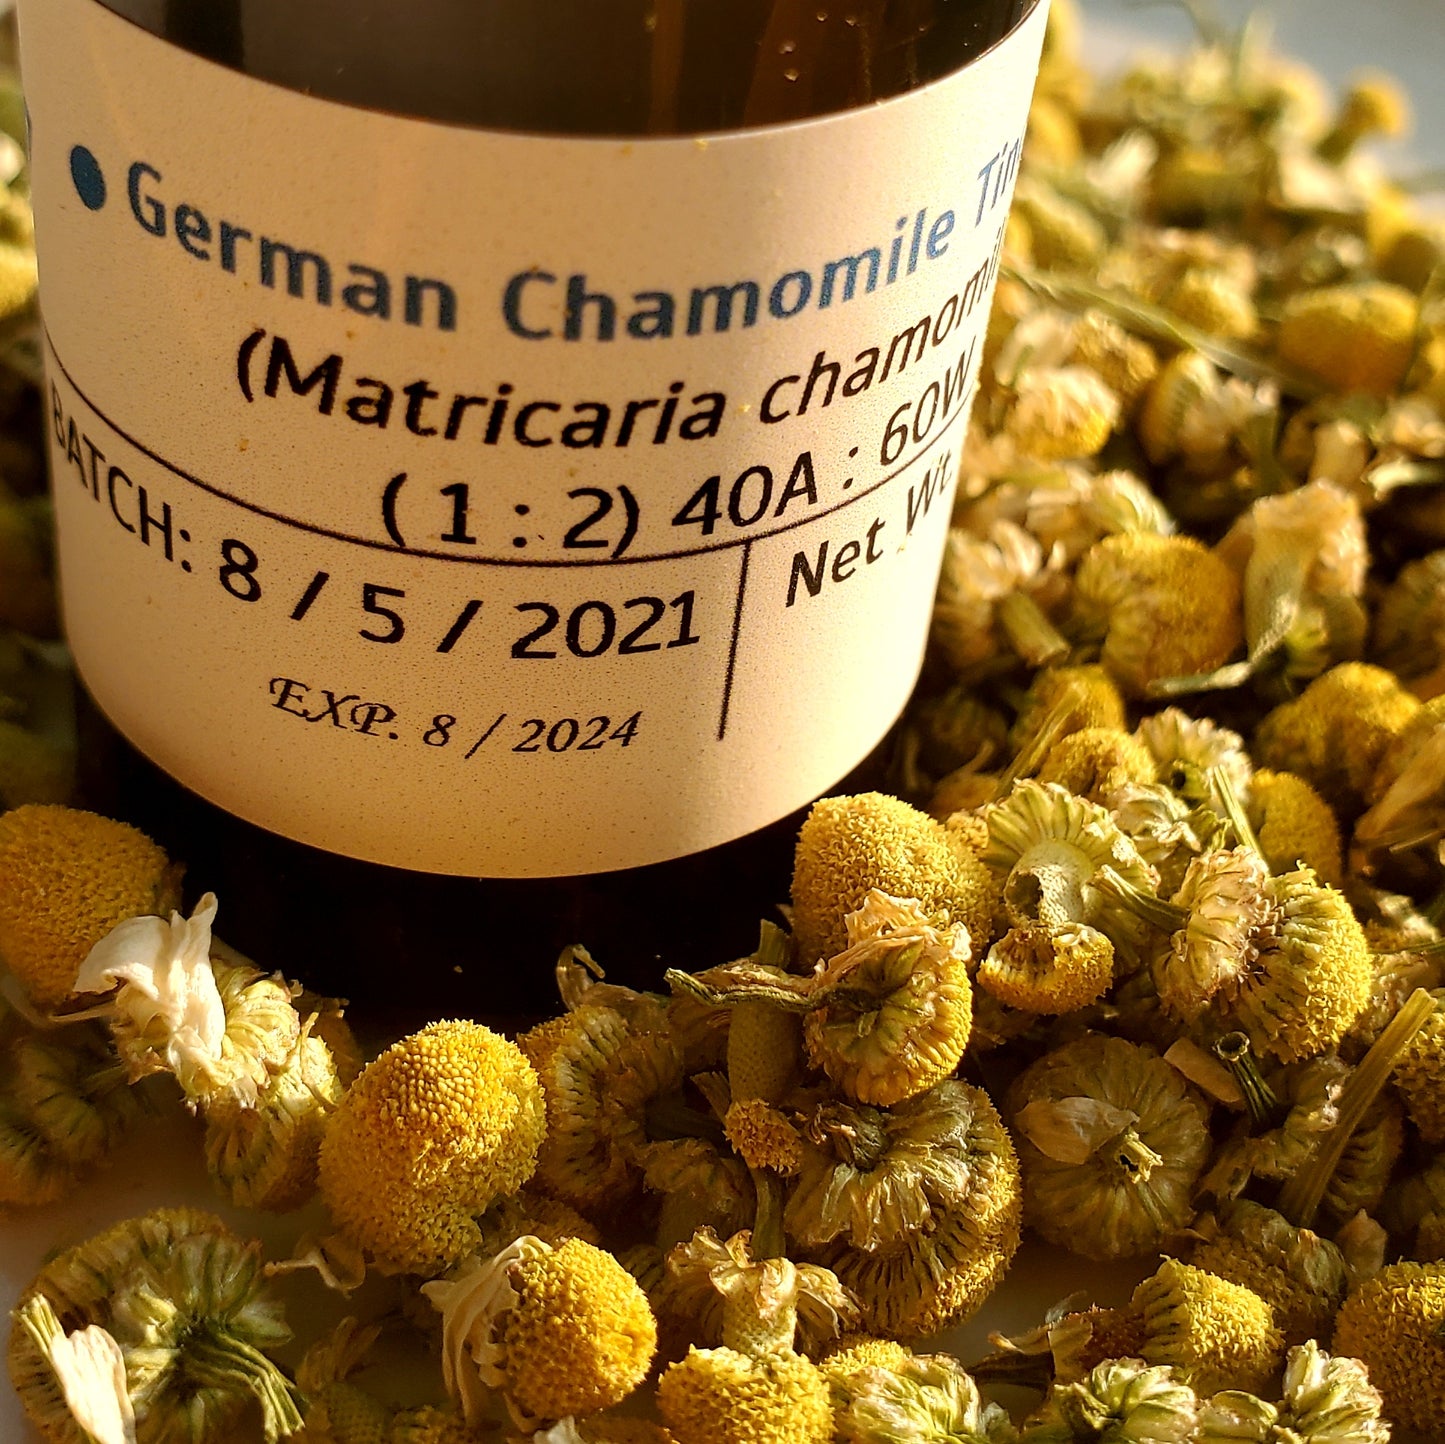 German Chamomile Tincture (Matricaria chamomilla)